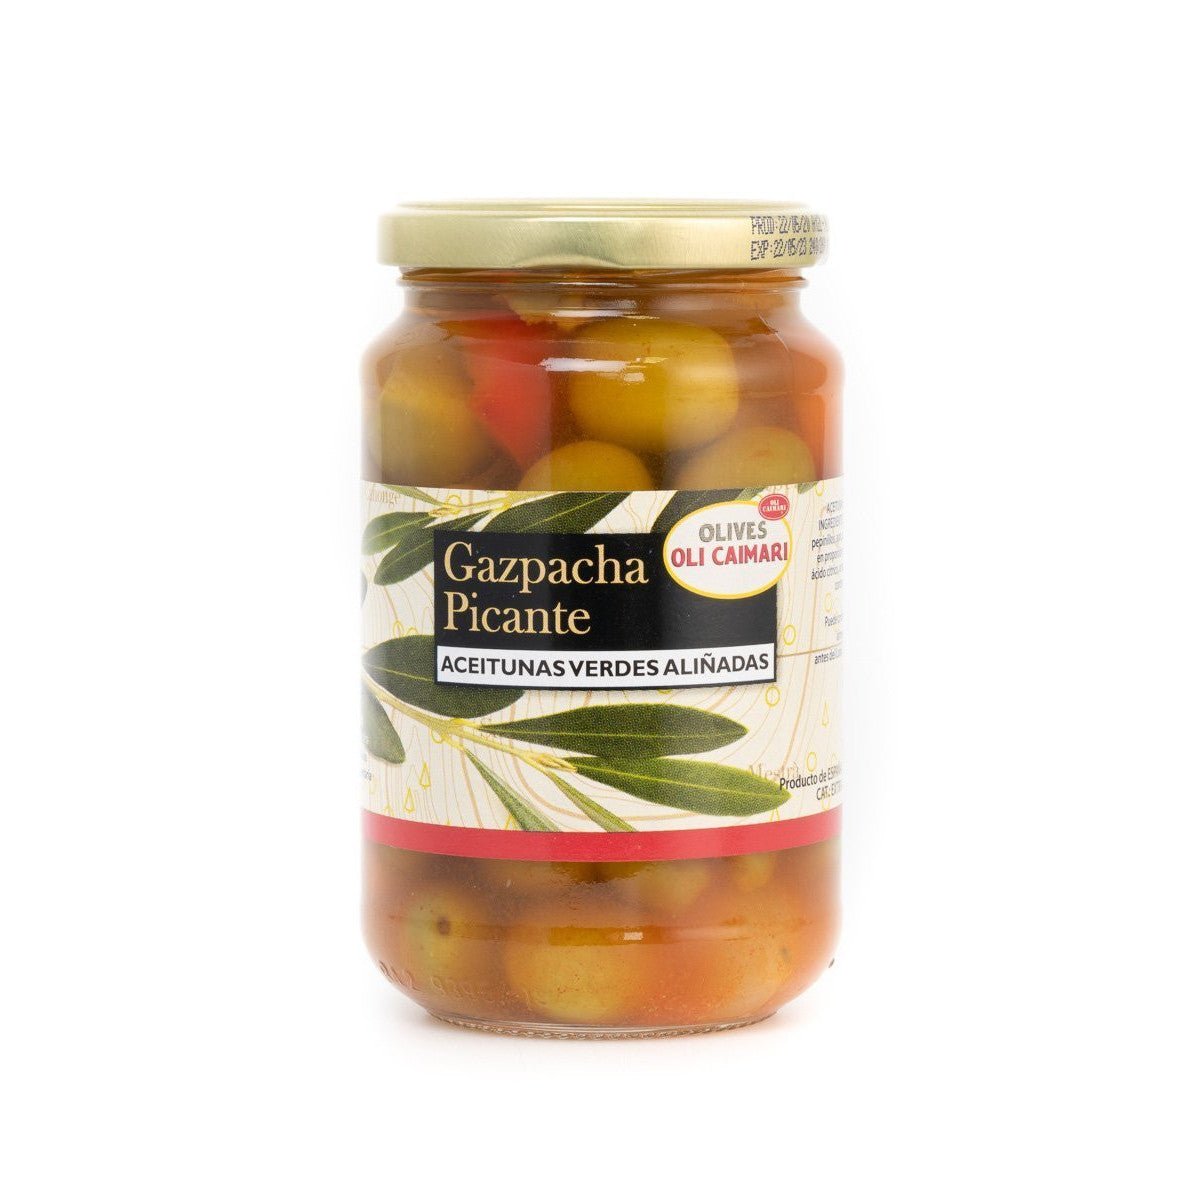 Gazpacha Picante grüne Oliven eingelegt (190g) - Gourmet Markt - Olives Oli Caimari